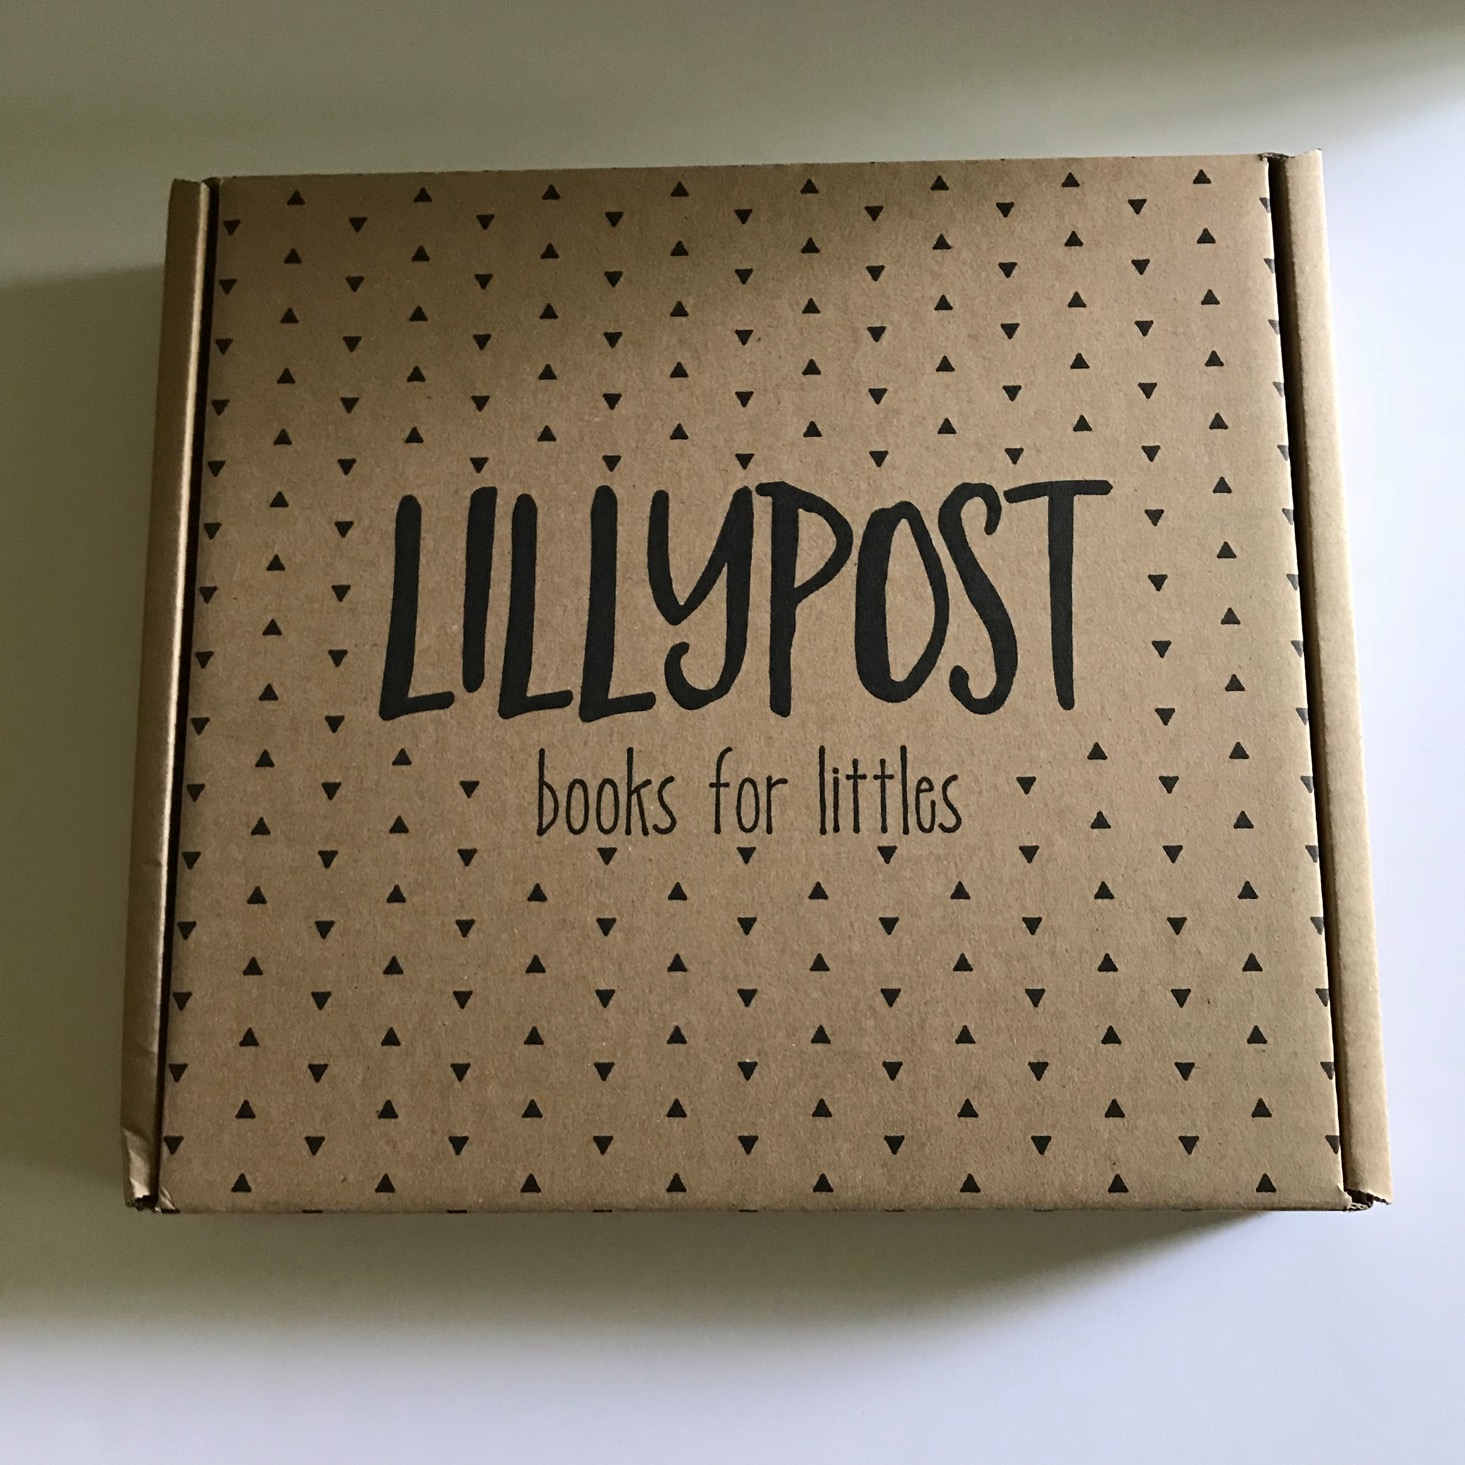 Lillypost June 2018 Box